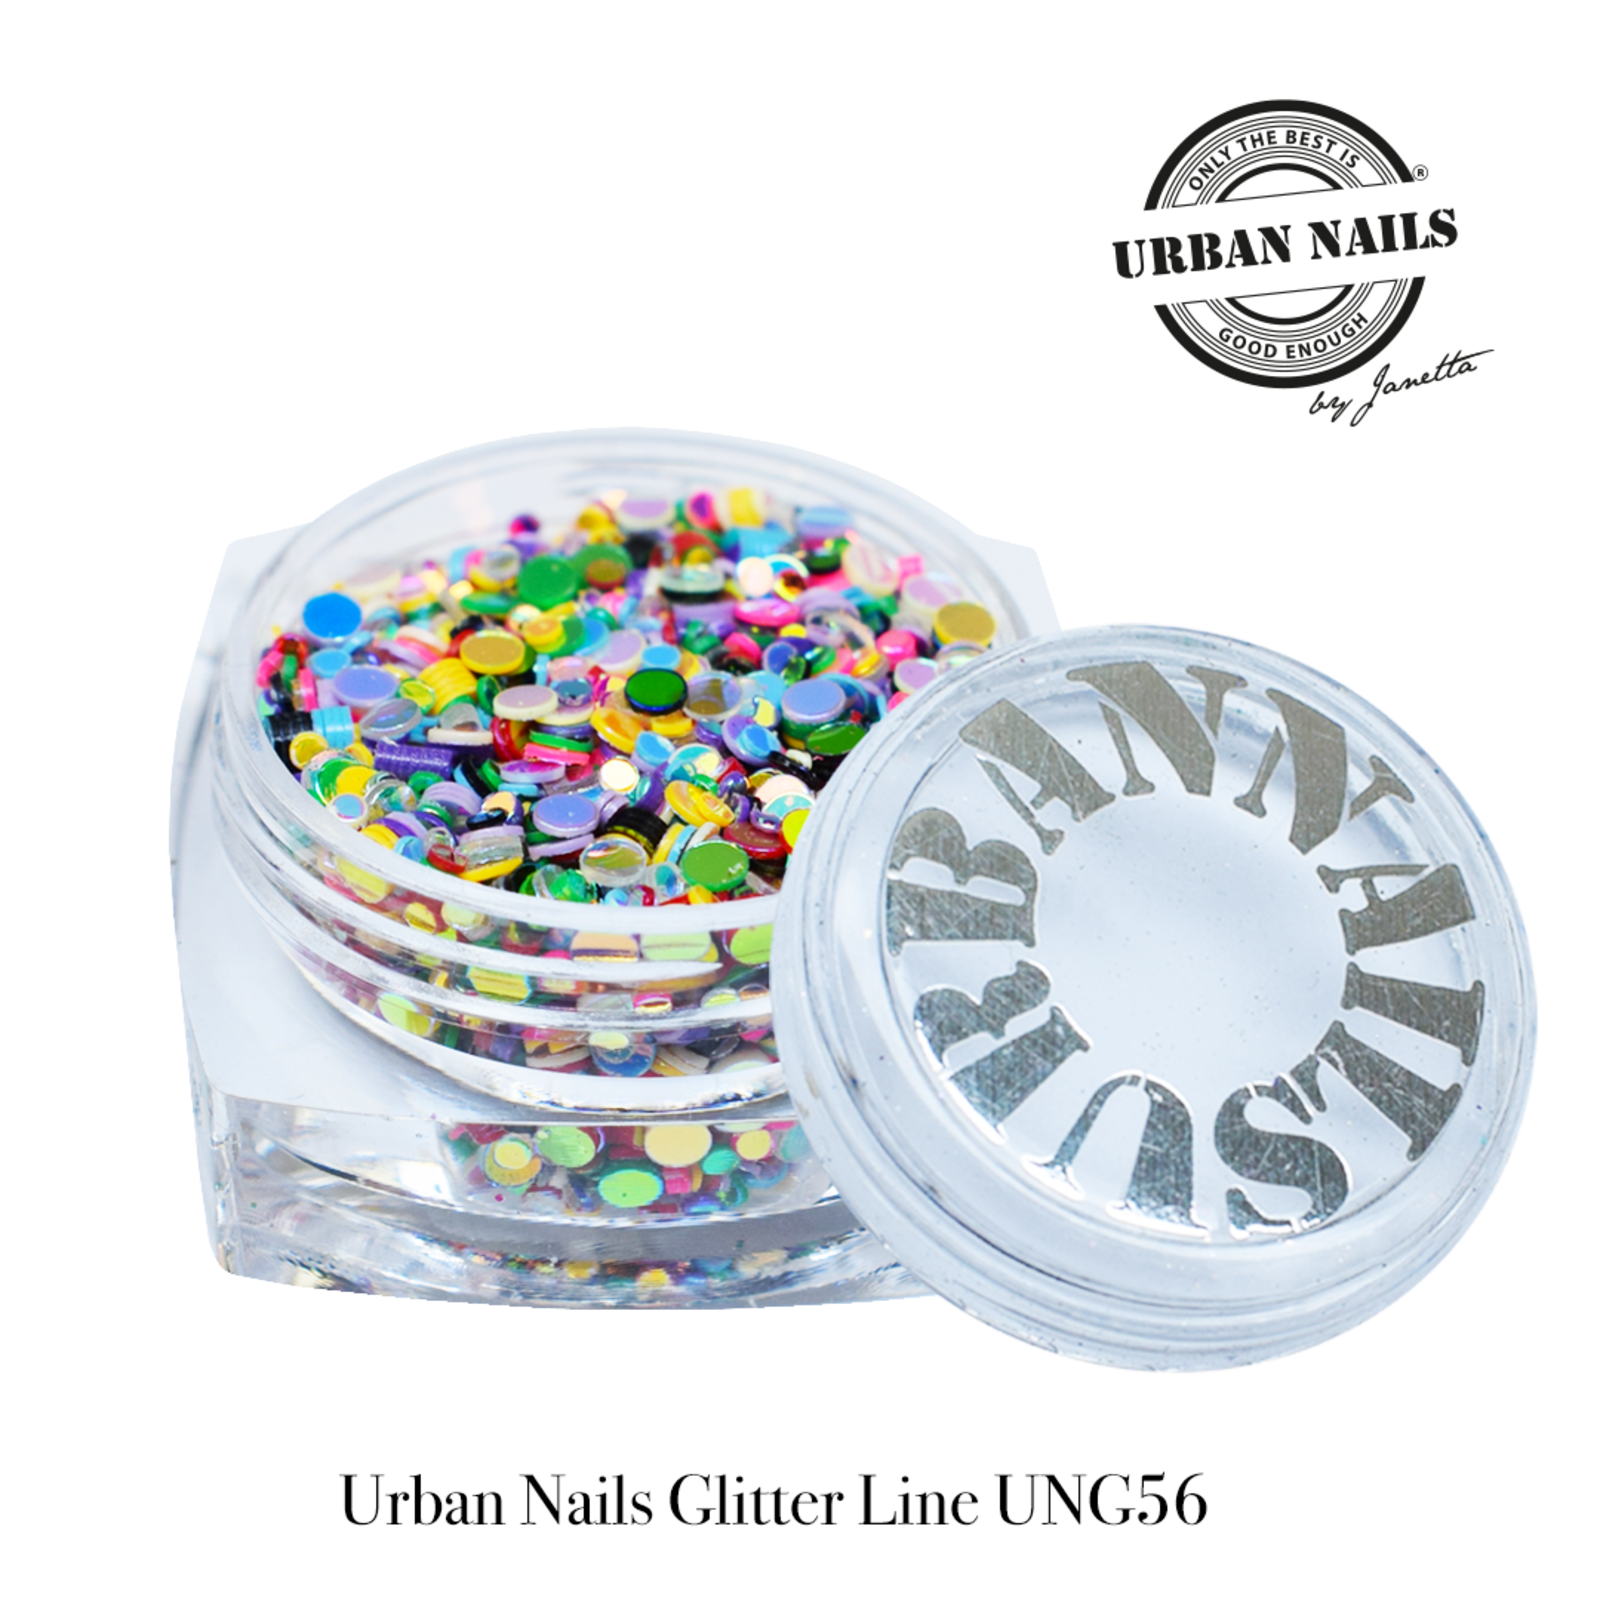 Urban nails Glitter Line UNG56